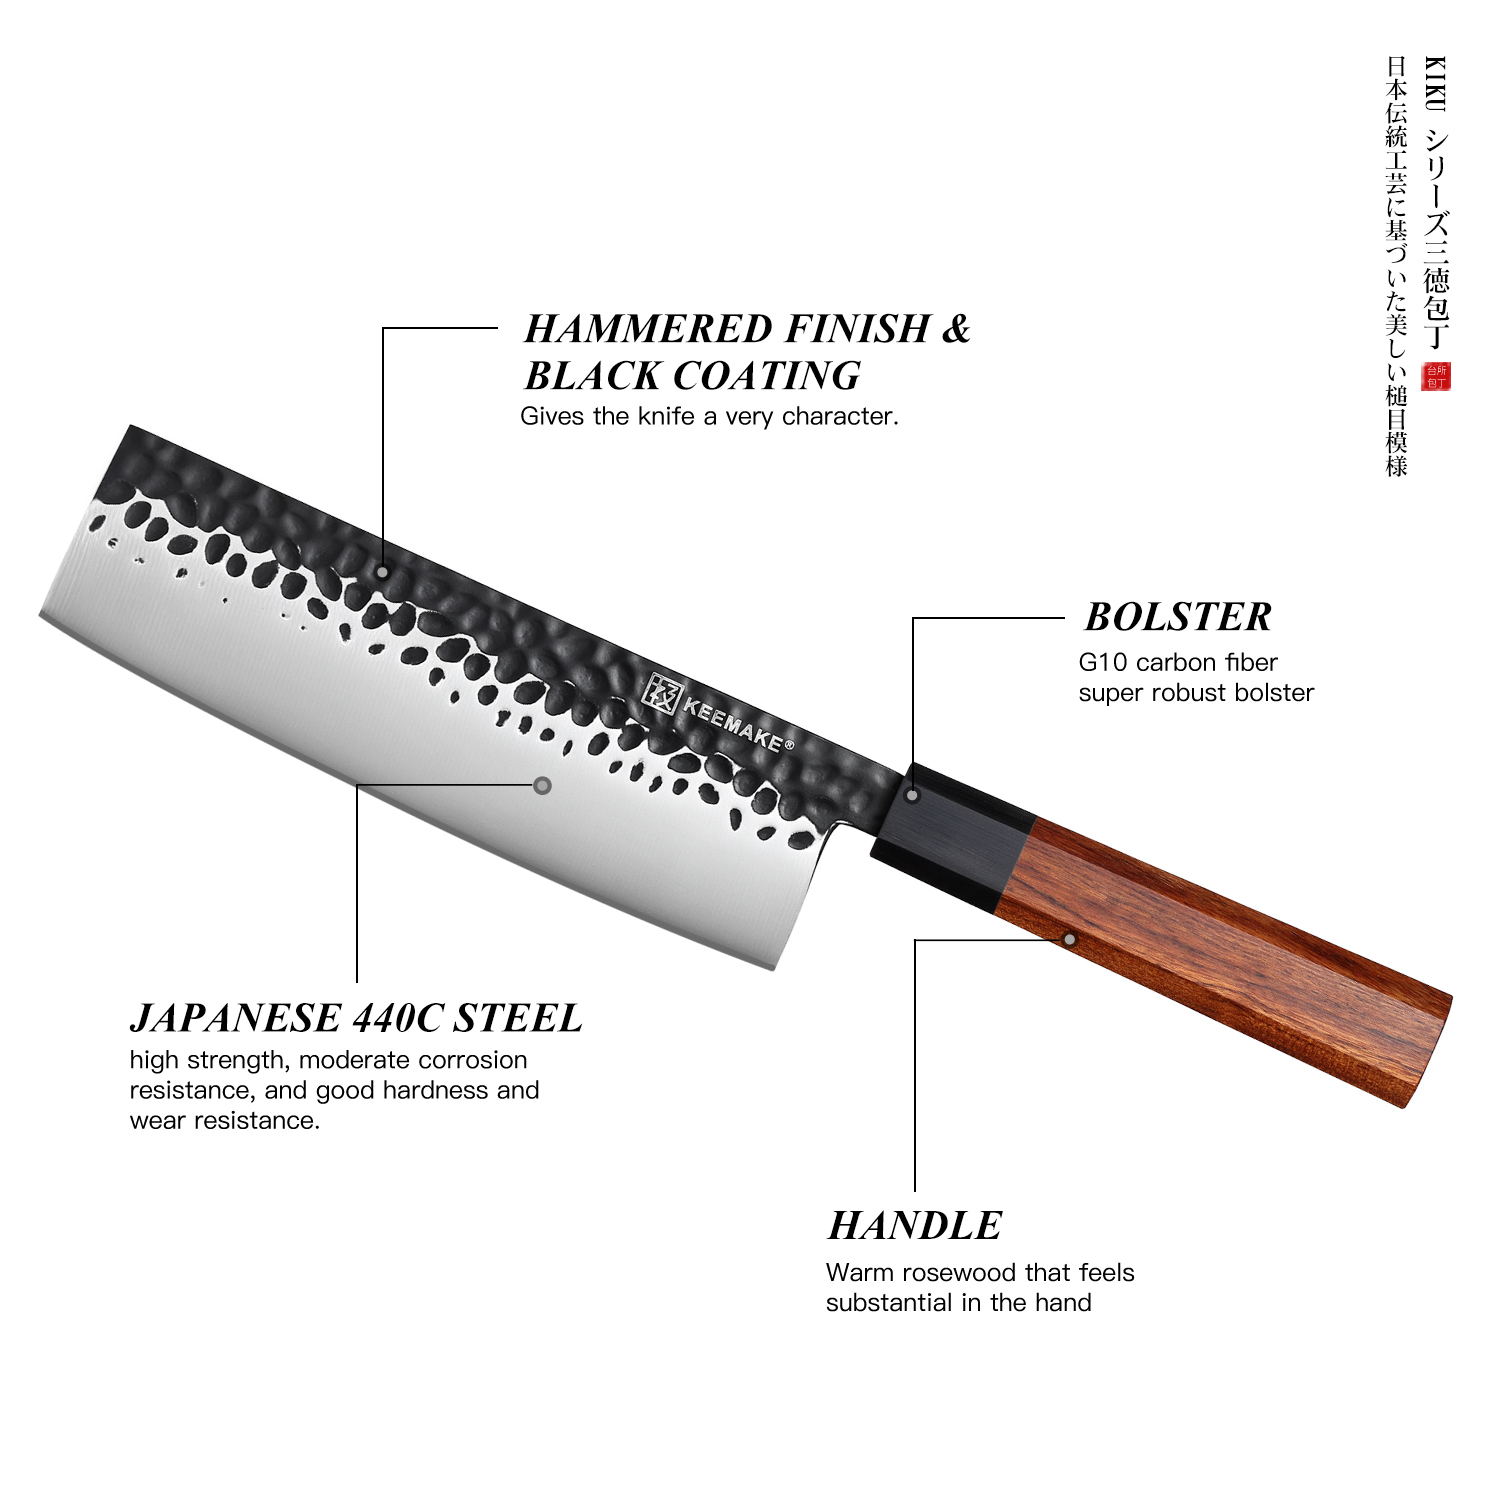 KEEMAKE Nakiri Knife Japanese Vegetable Knife 7 inch